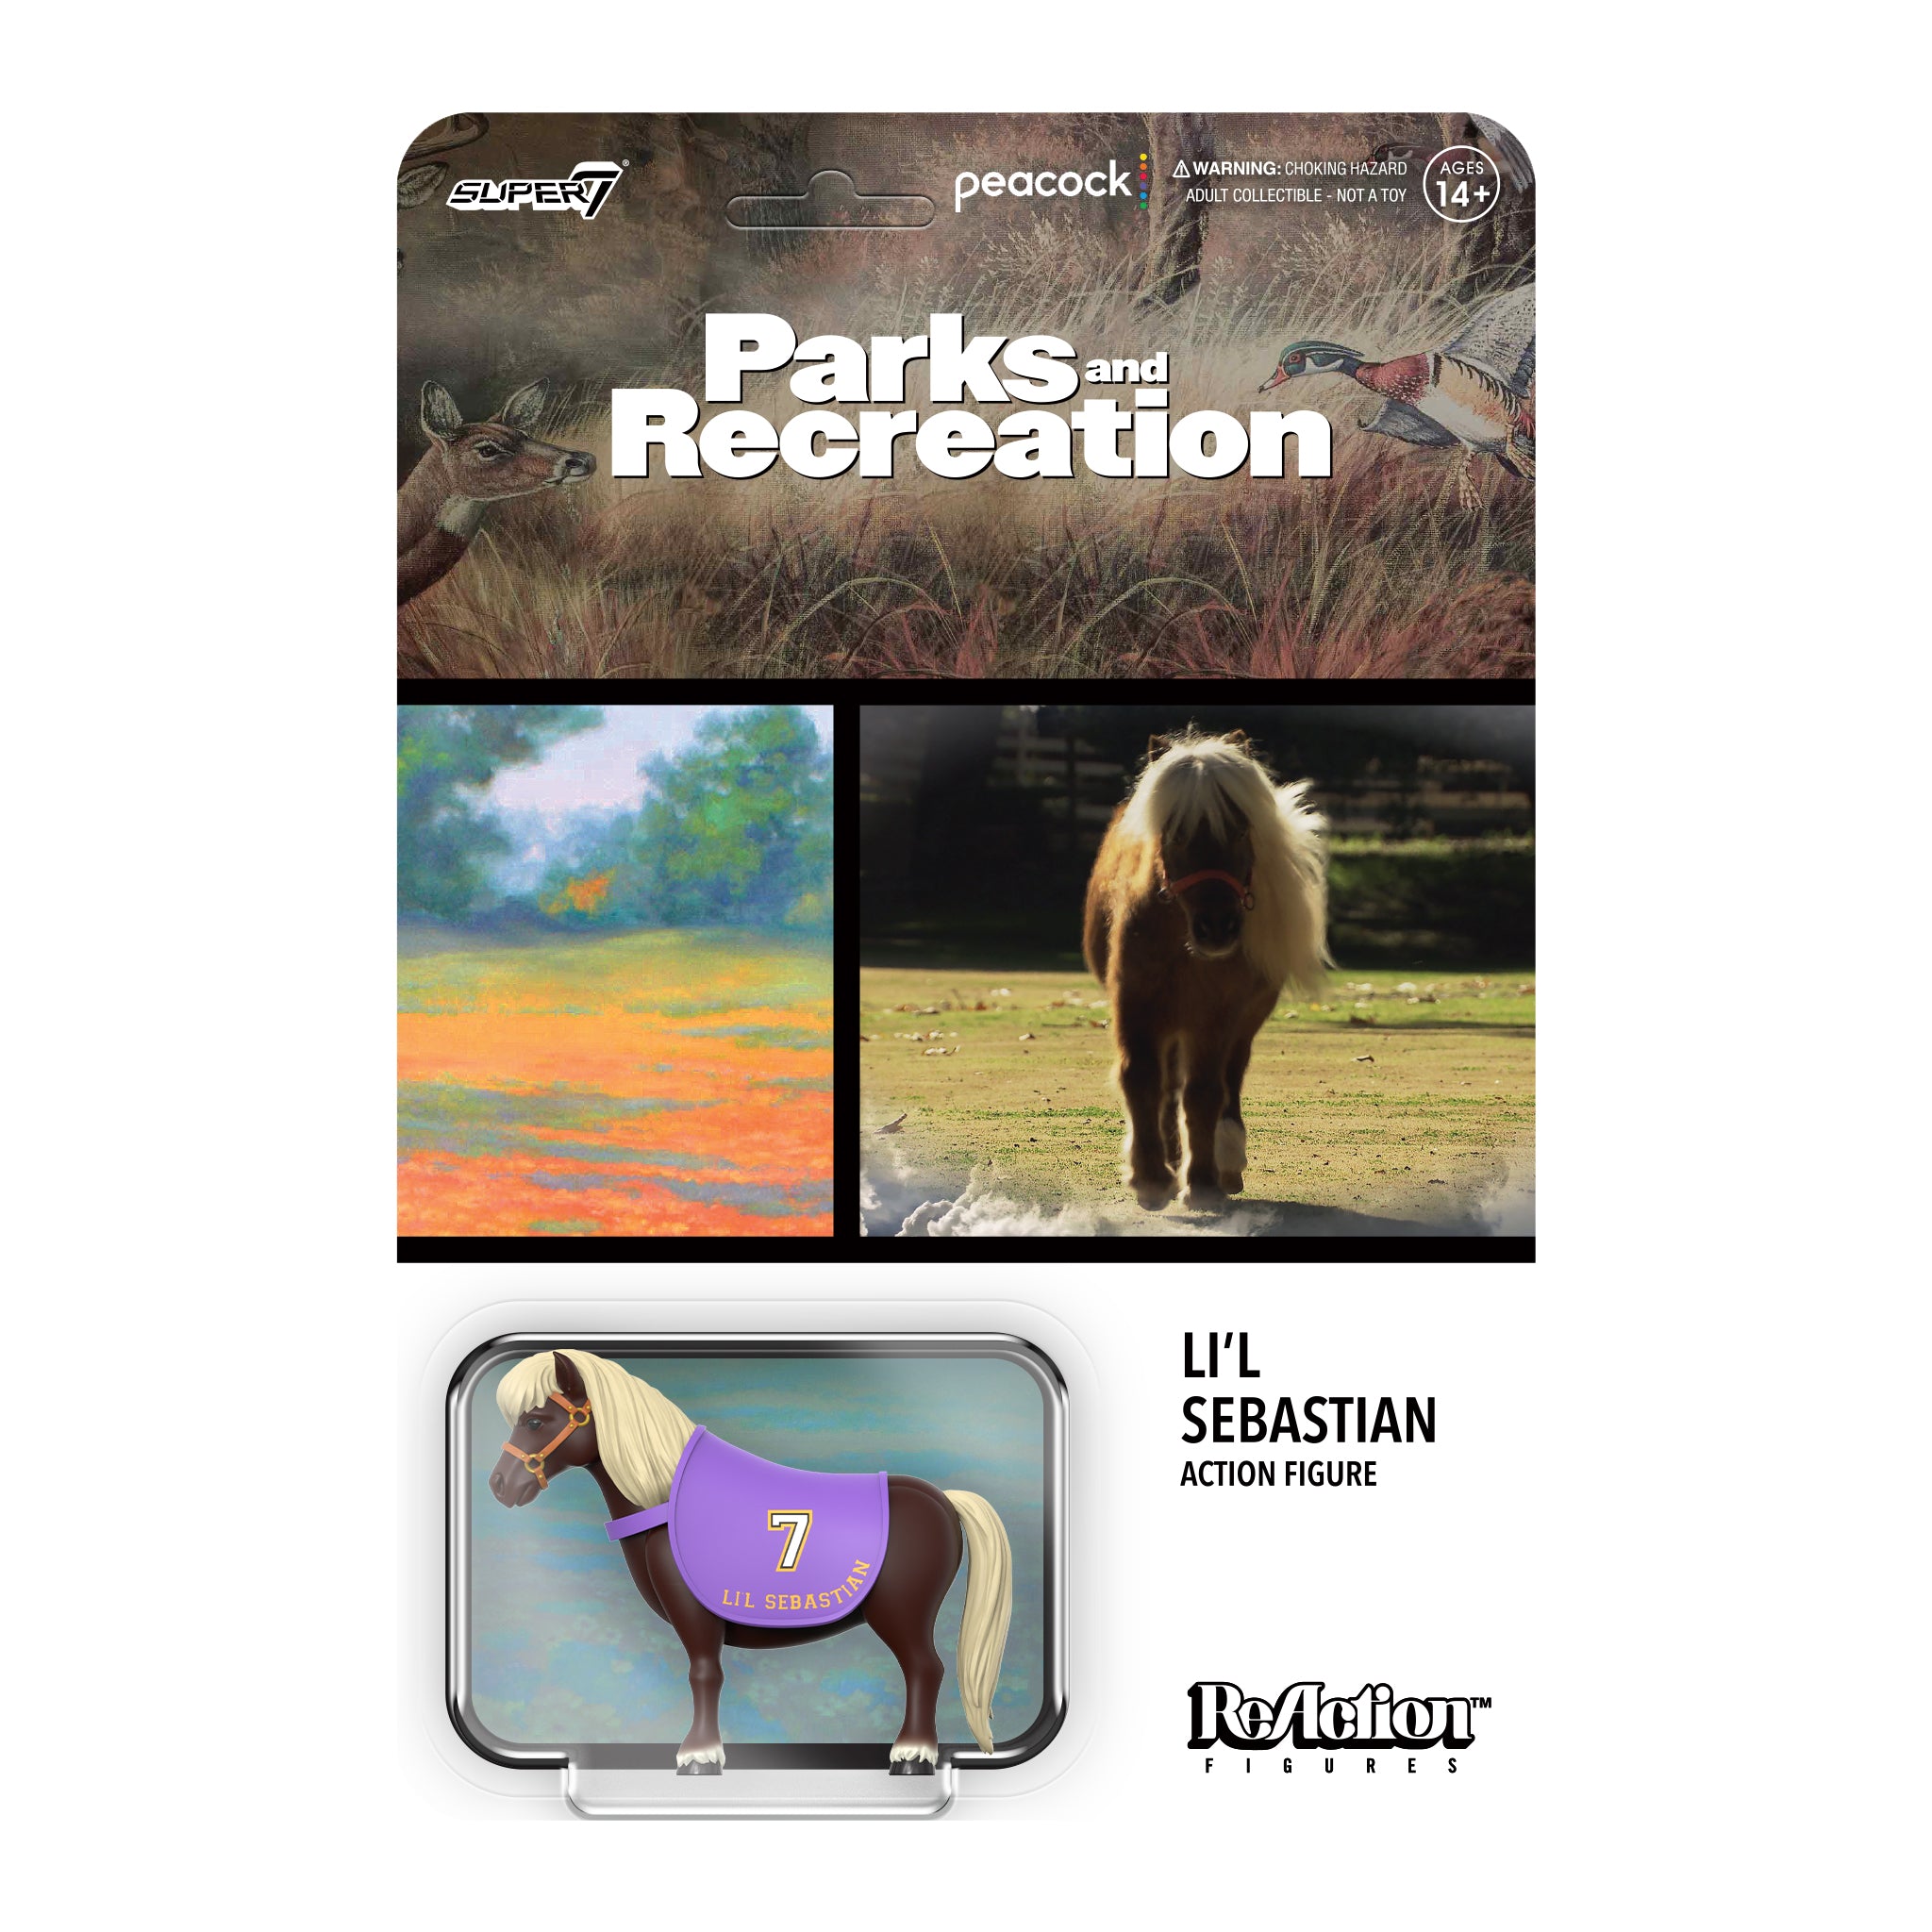 Parks and Recreation ReAction Figures Wave 2 - Li'l Sebastian